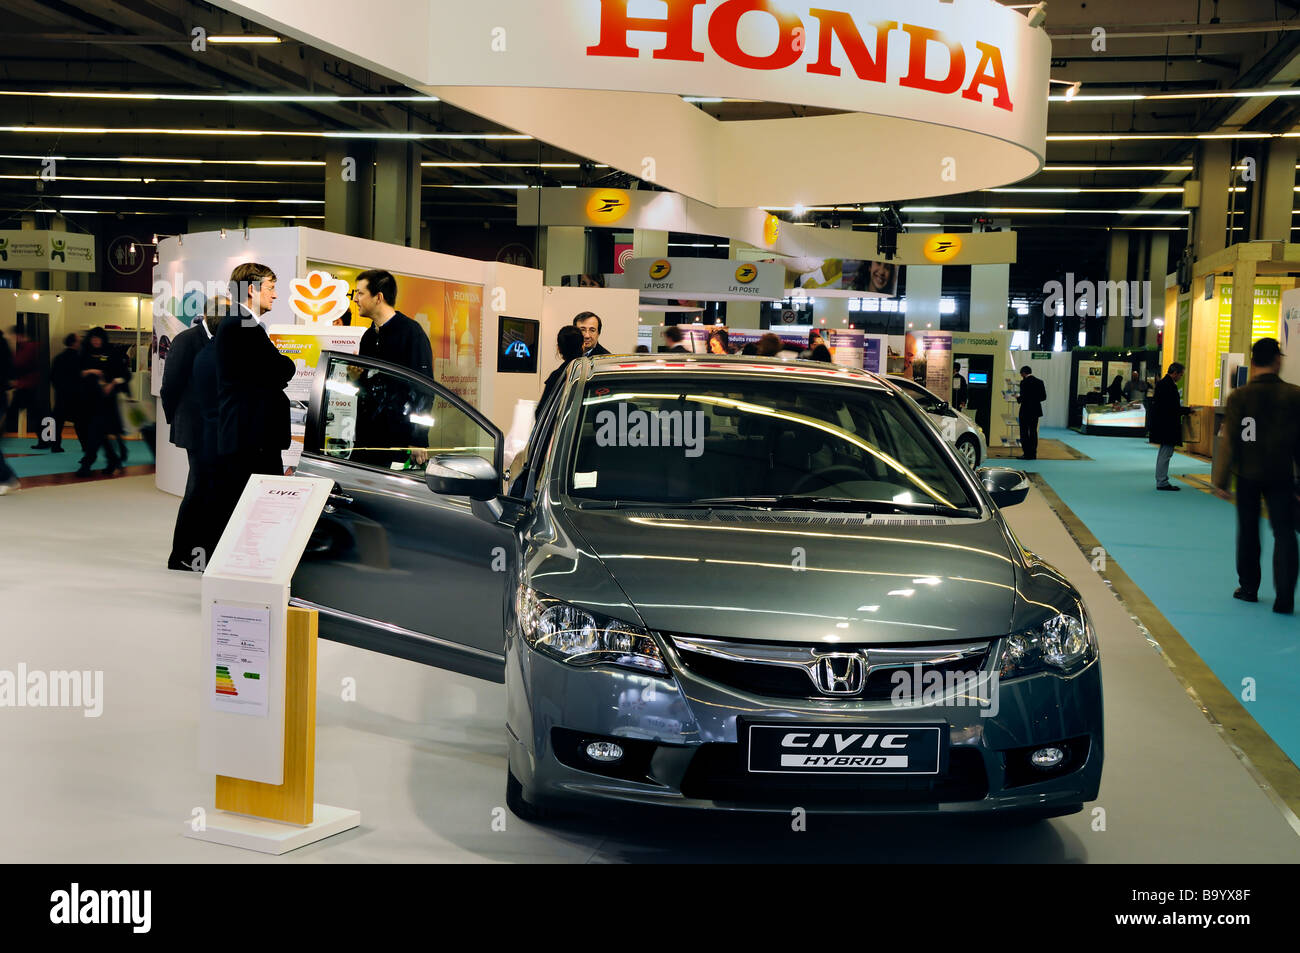 Paris France, Businessmen 'Honda Car Company', 'Sustainability Trade Show' 'Salon Durable' Civic 'Hybrid Car' Stock Photo